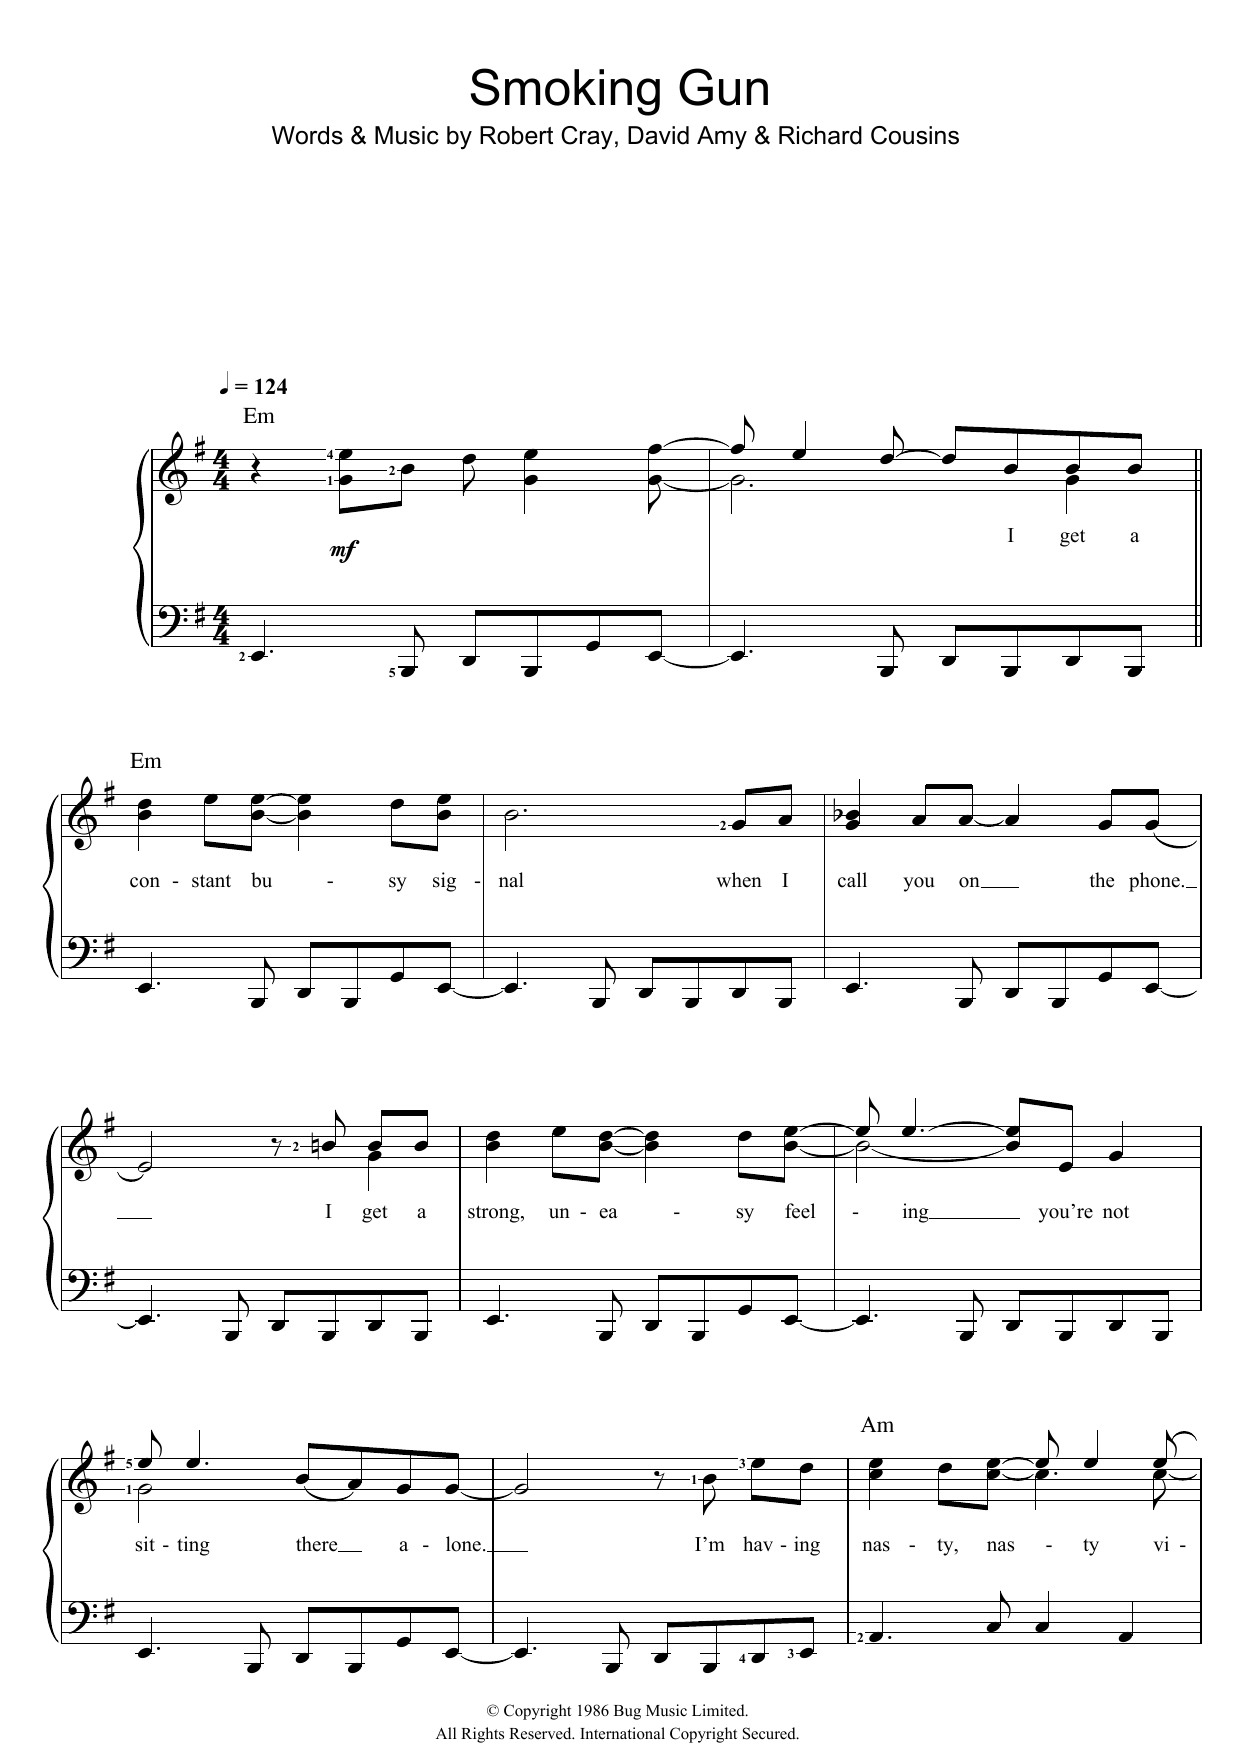 Robert Cray Smoking Gun Sheet Music Notes & Chords for Real Book – Melody, Lyrics & Chords - Download or Print PDF